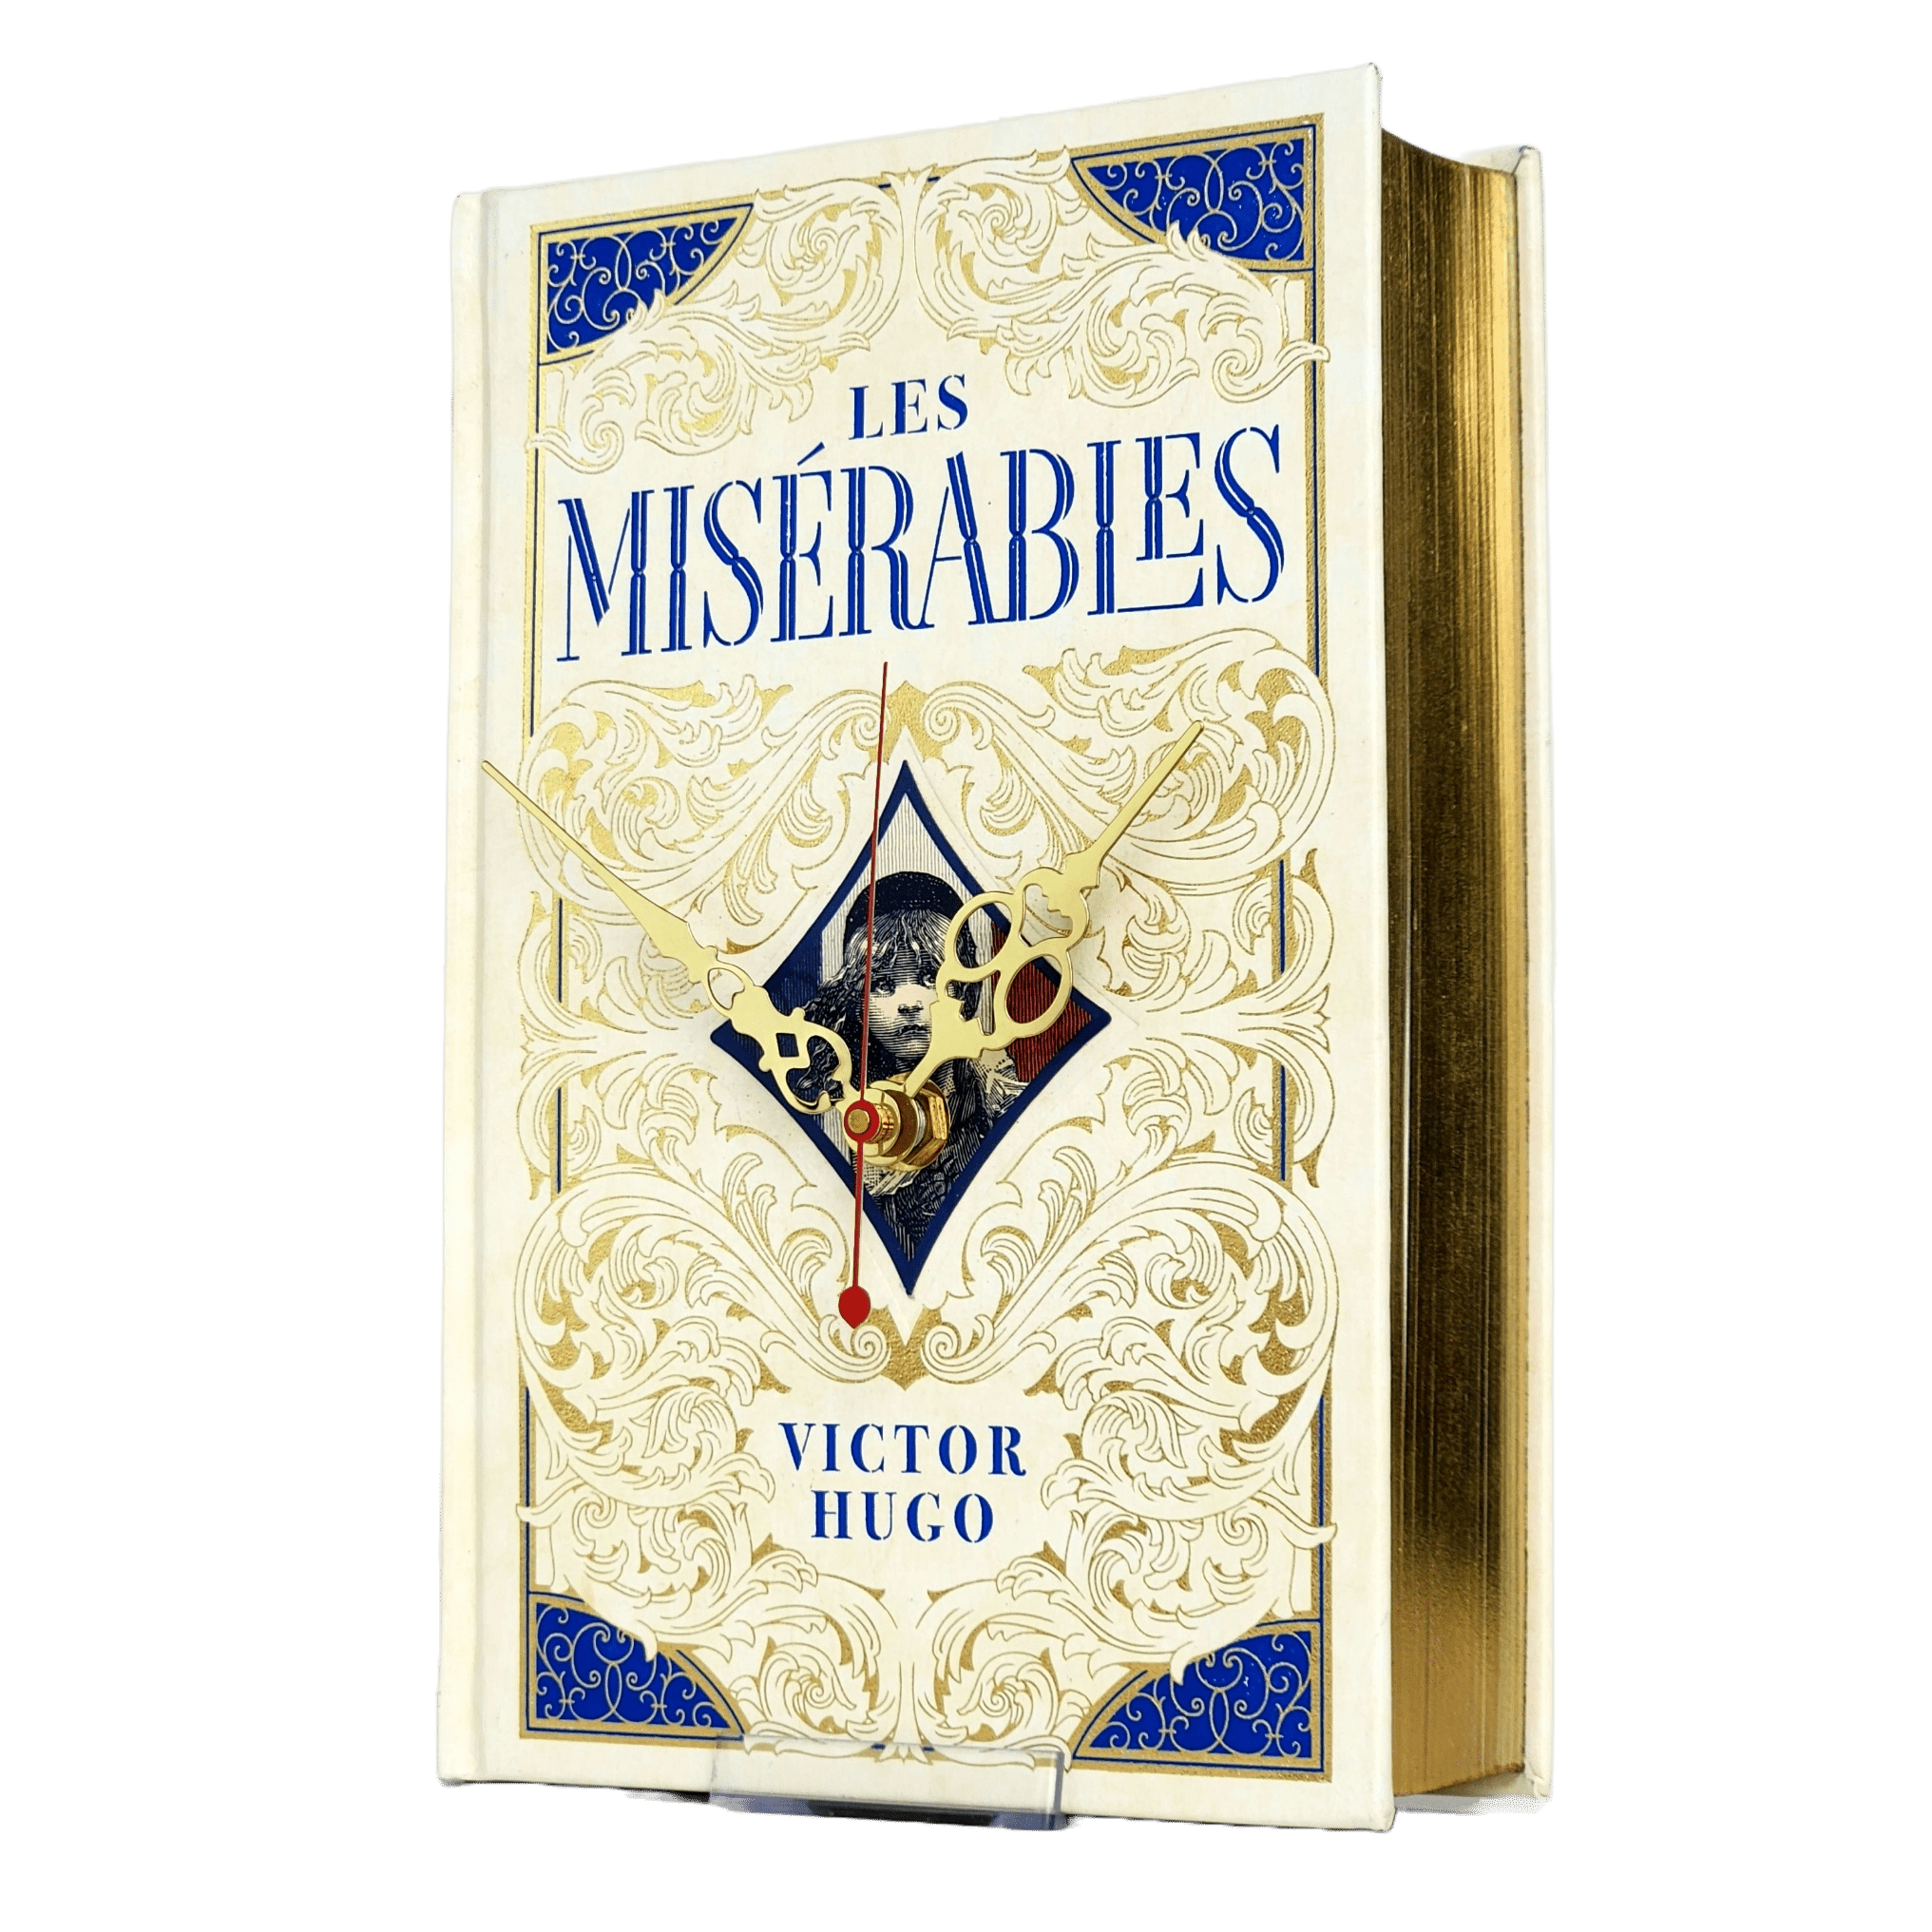  Miserabili: 9788806222093: Hugo, Victor: Books